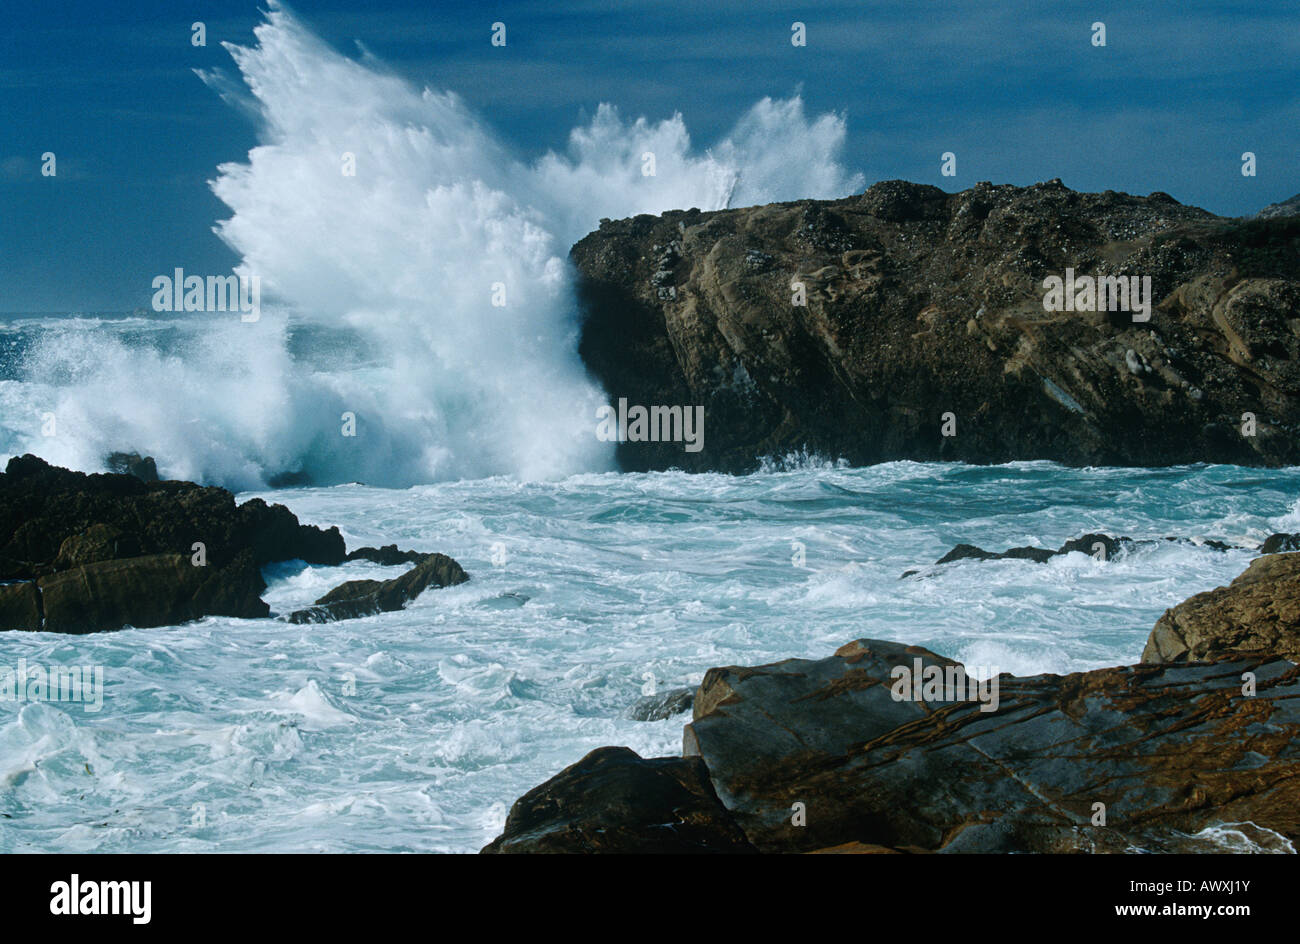 USA, California, Point Lobos, waves splashing on rocks at Pacific coast Stock Photo